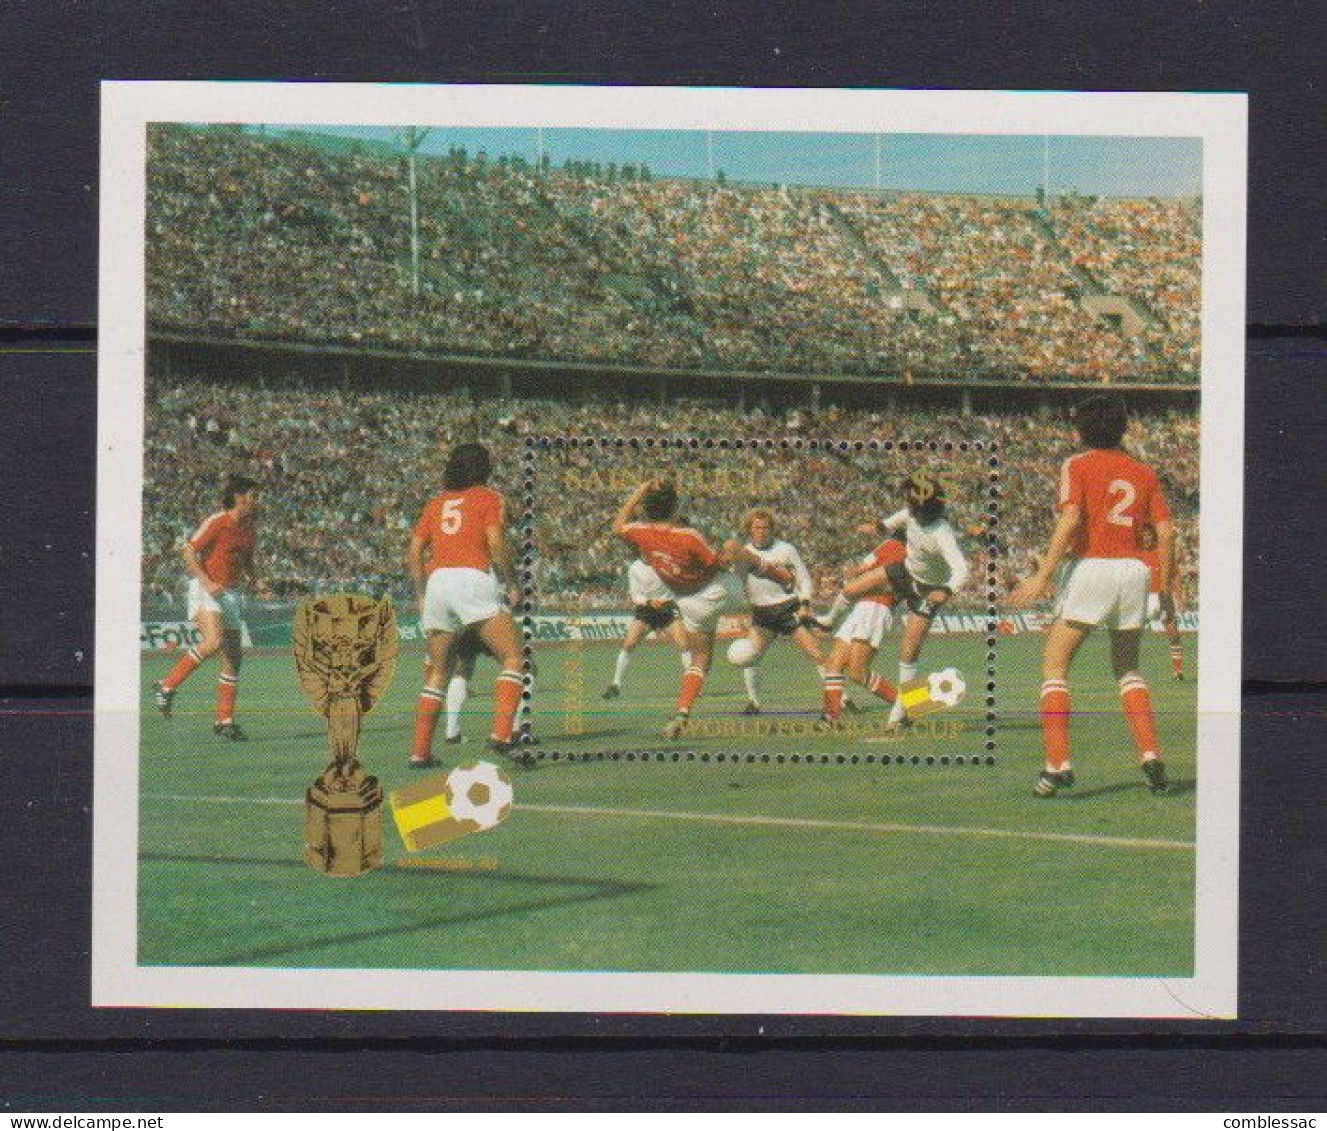 SAINT LUCIA    1982   World  Cup  Football    Sheetlet     MNH - St.Lucia (1979-...)